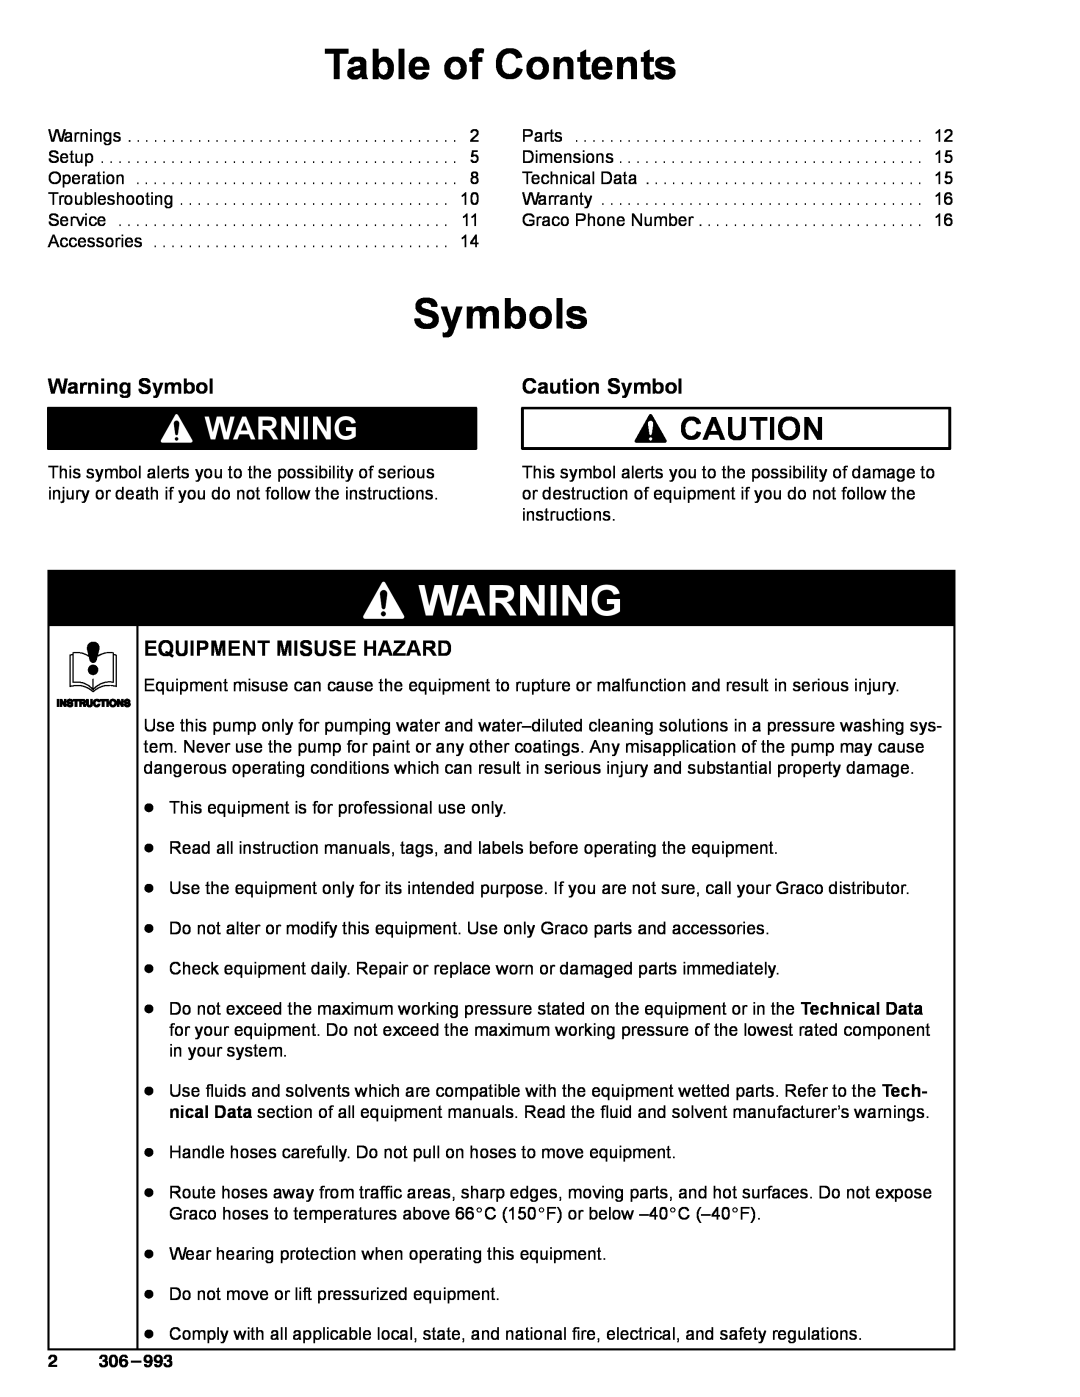 Graco Inc 205-985, 306-993, 207-860 Table of Contents, Symbols, Warning Symbol, Caution Symbol, Equipment Misuse Hazard 